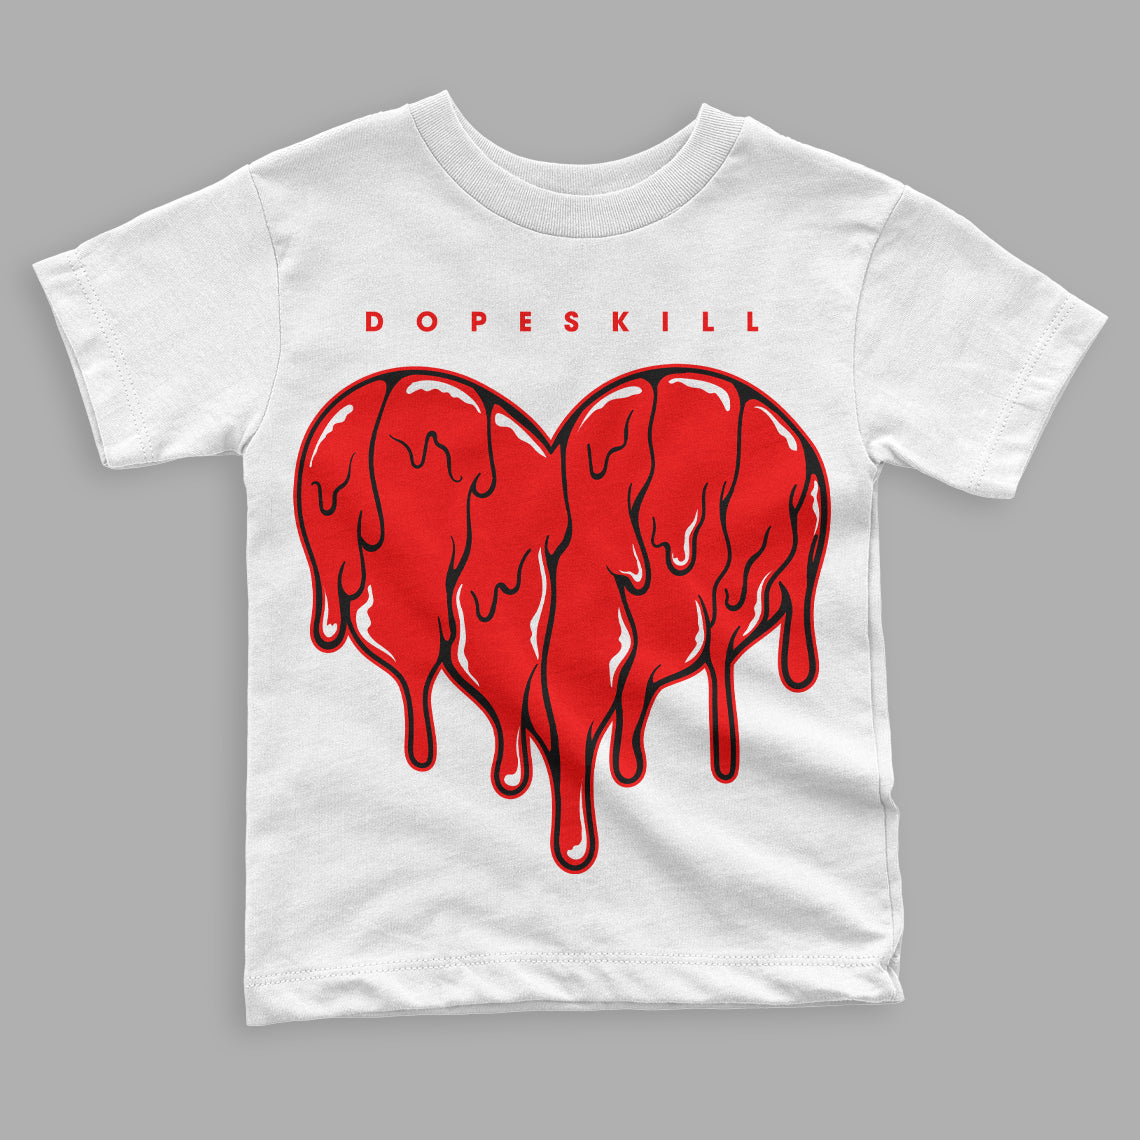 Jordan 9 Chile Red DopeSkill Toddler Kids T-shirt Slime Drip Heart Graphic Streetwear  - White 